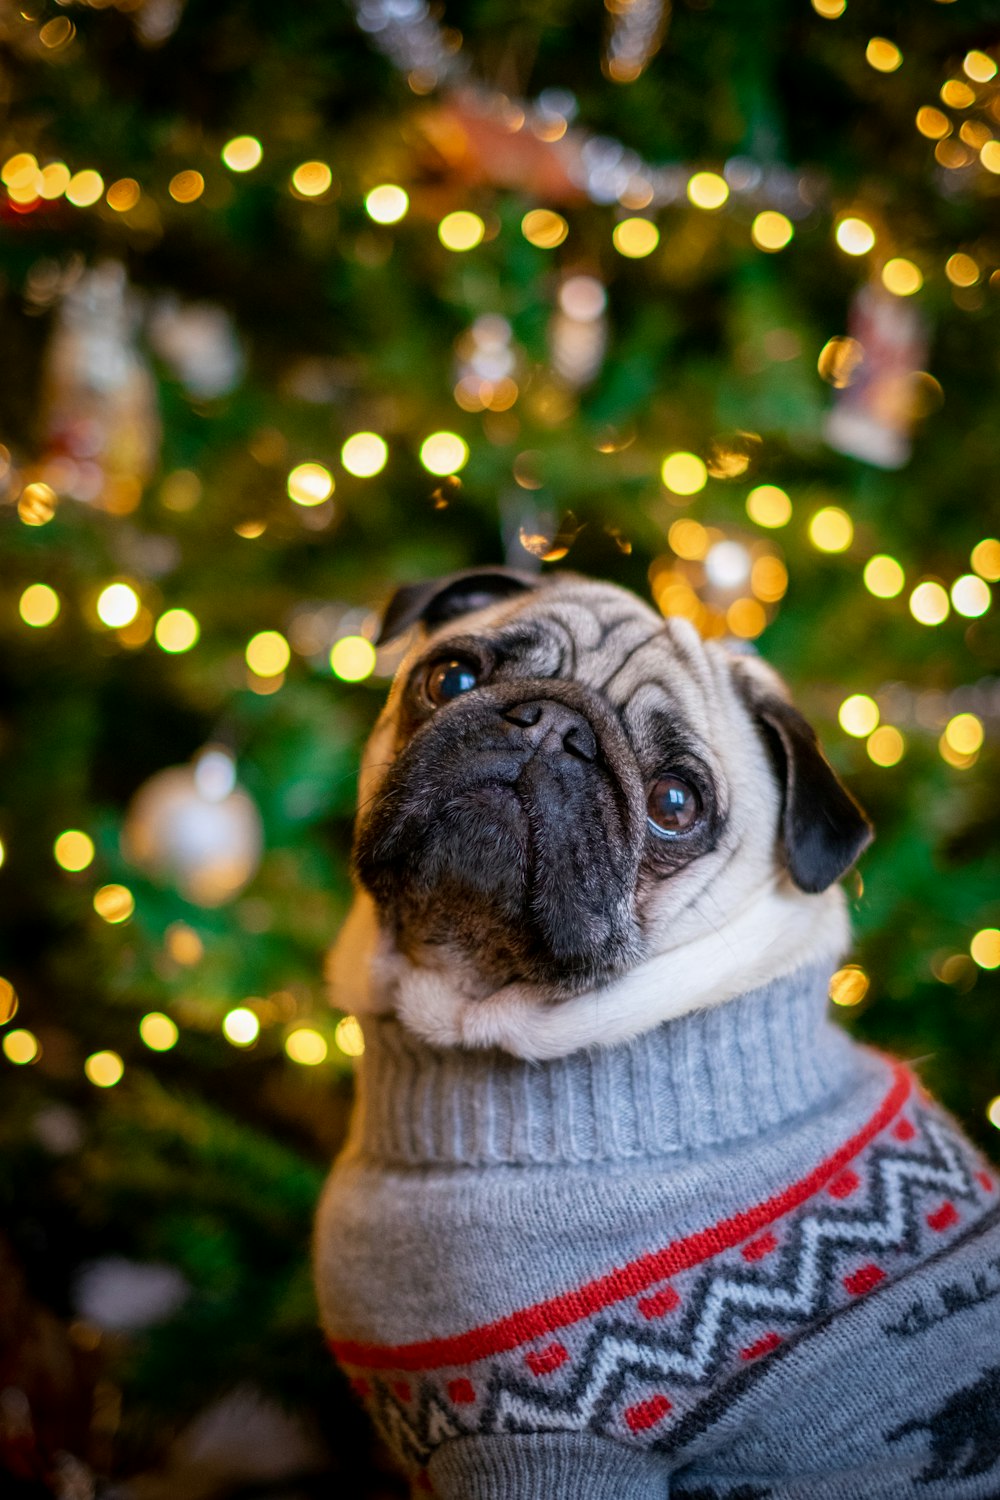 pawn pug standing beside lit Christmas tree